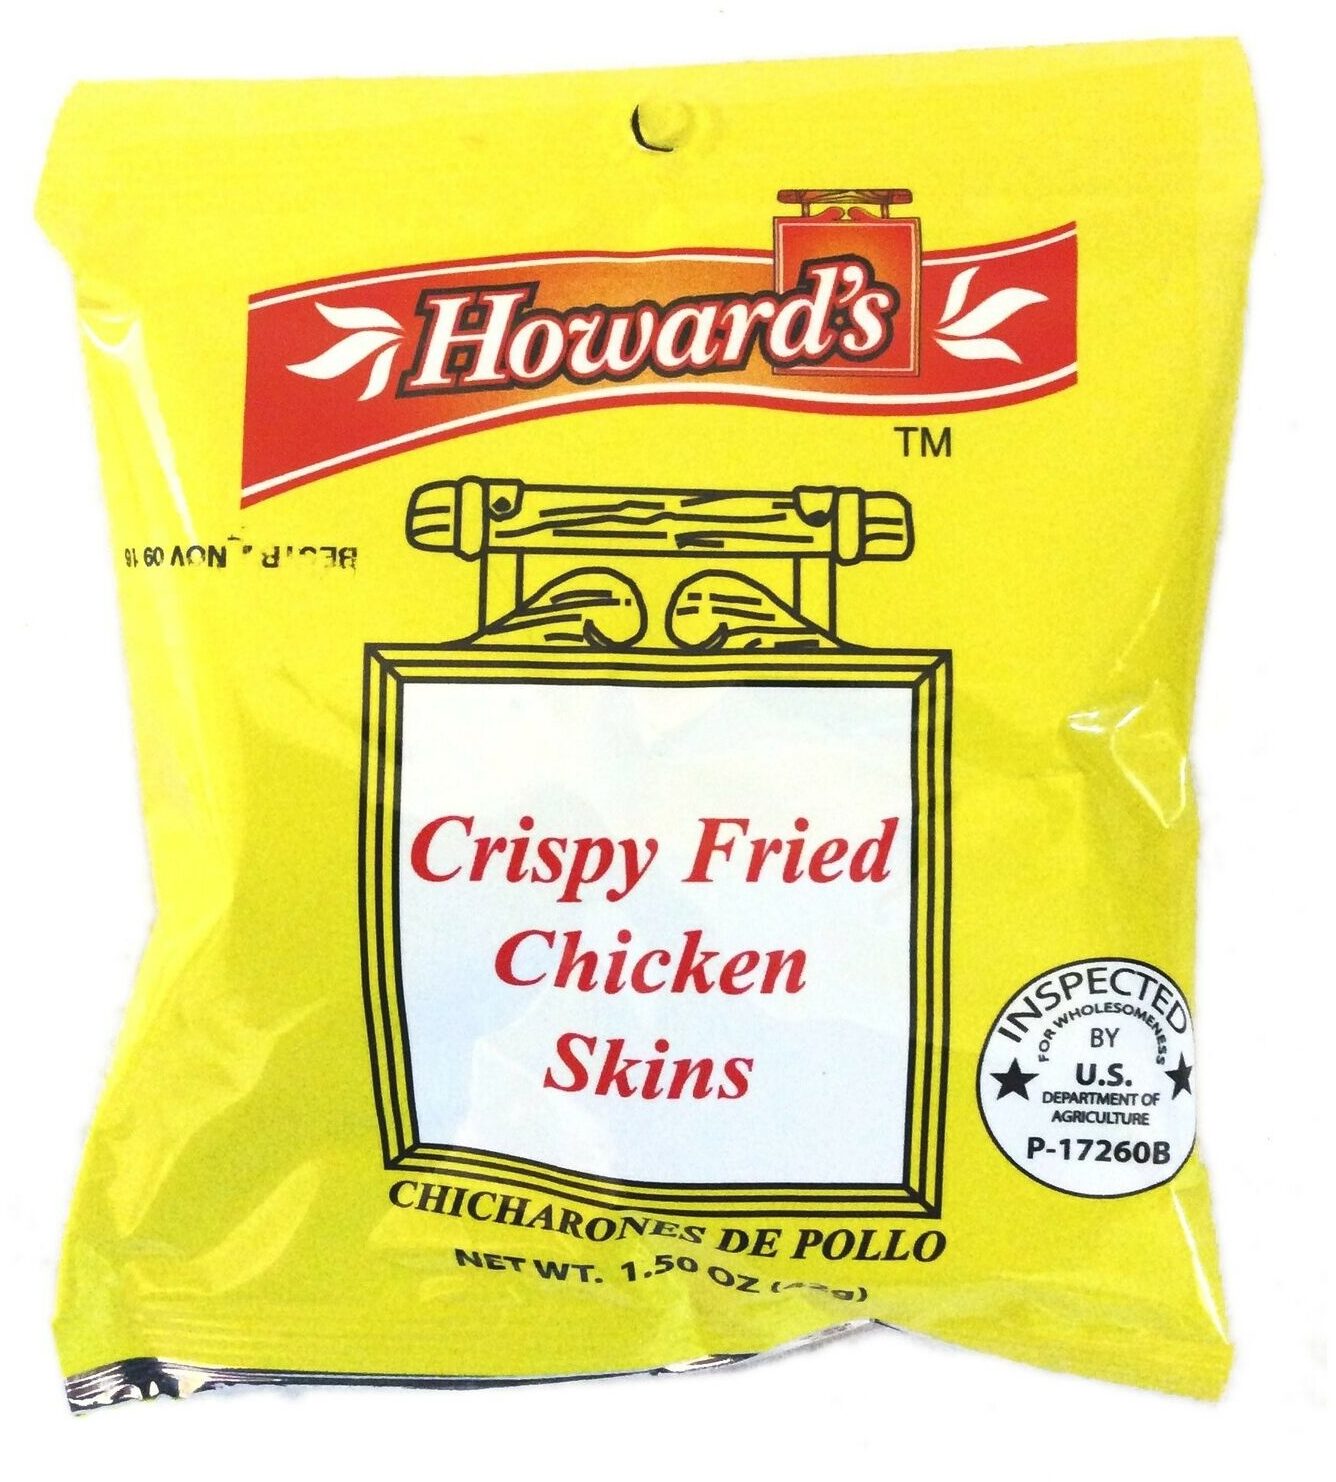 Crispy Fried Chicken Skin - Product